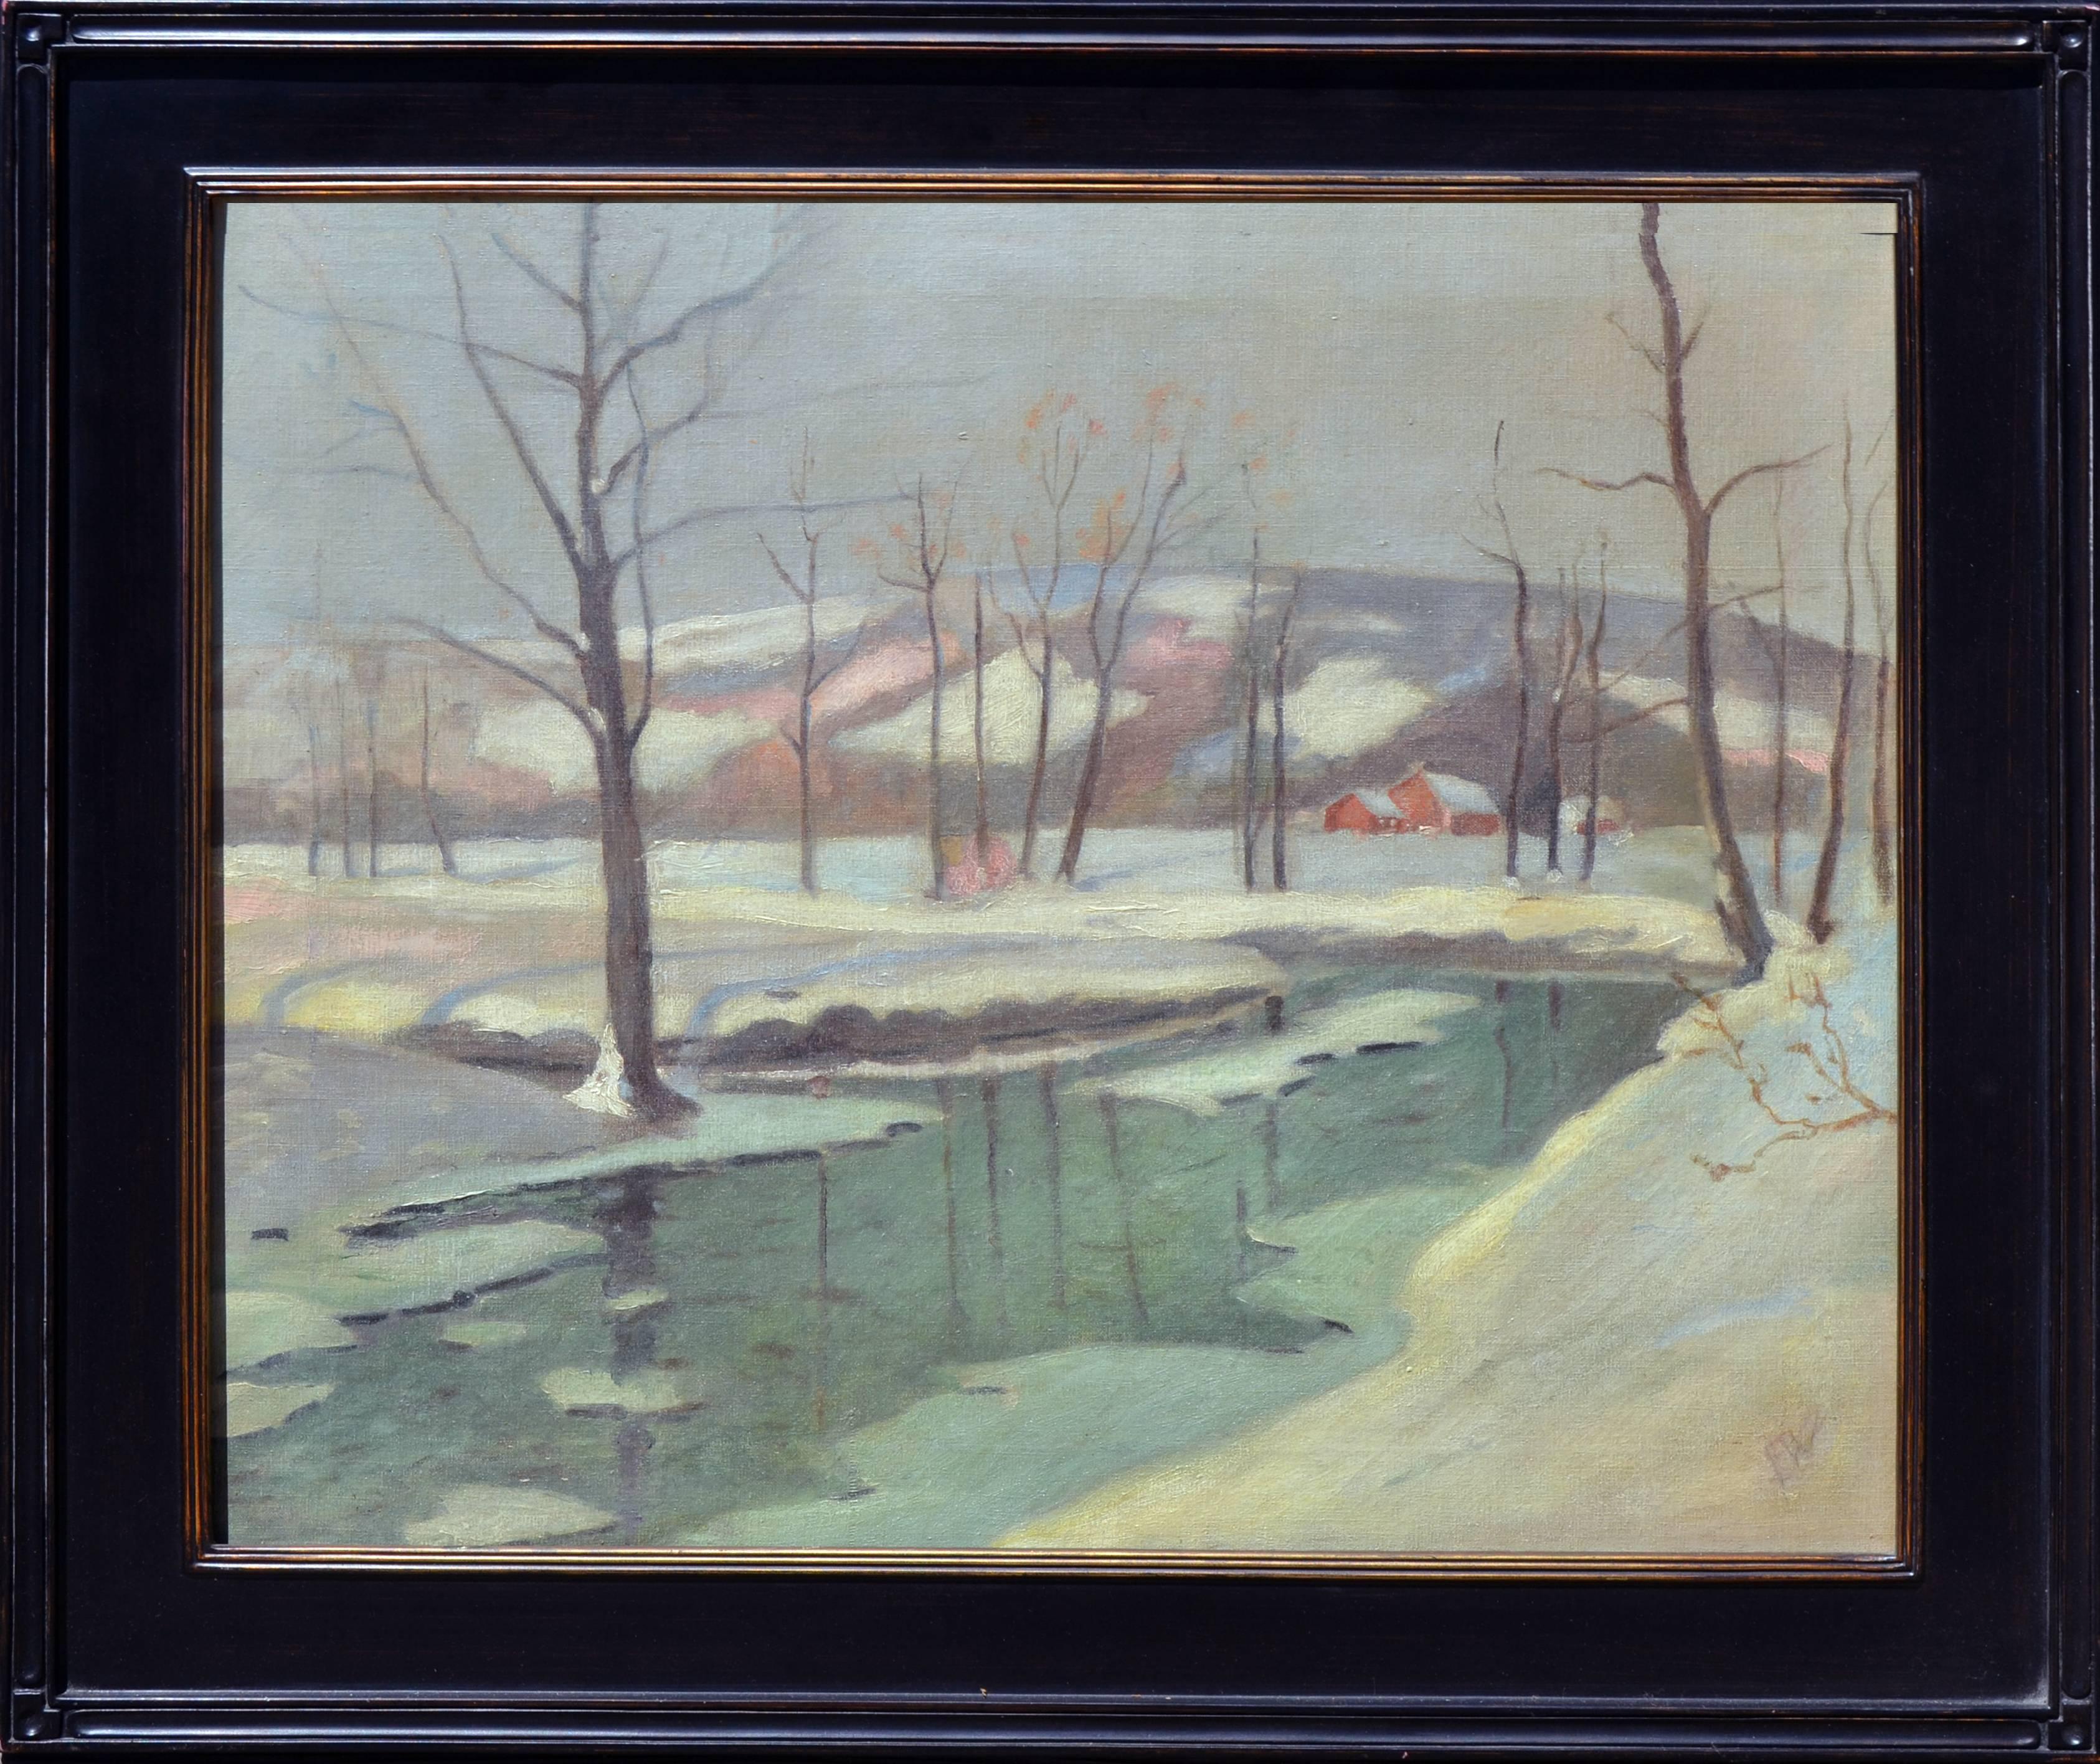 Frederick R. Wagner Landscape Painting - A Winter Scene - Snowy 1930's Landscape